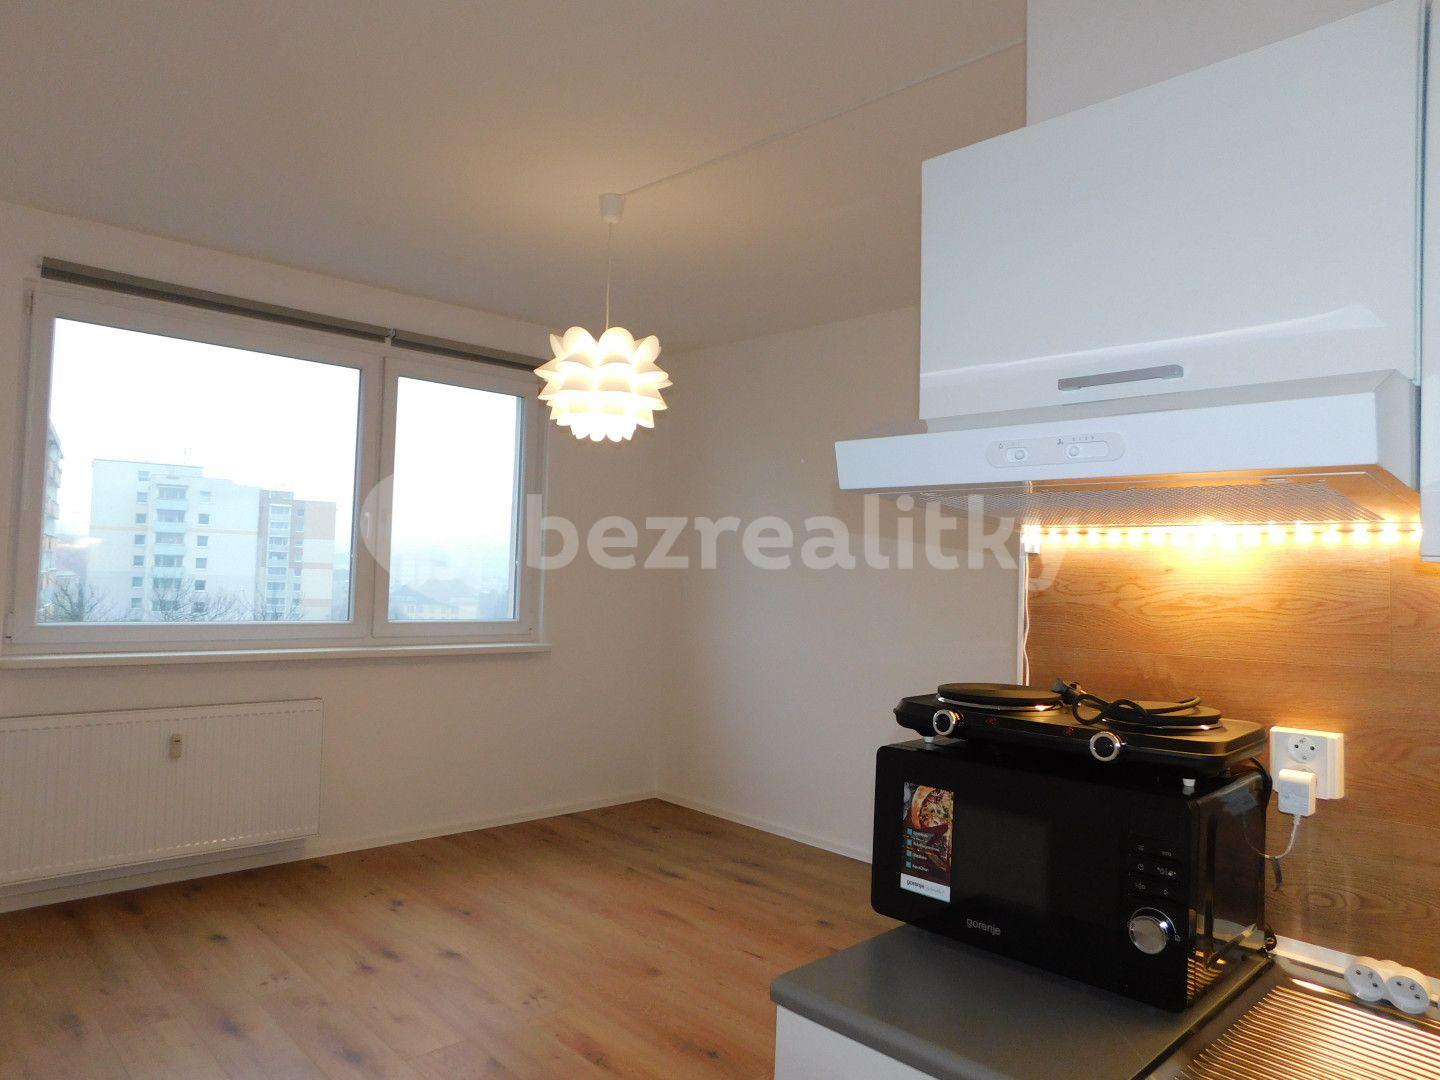 Predaj bytu 1-izbový 28 m², Na Vršku, Jablonec nad Nisou, Liberecký kraj